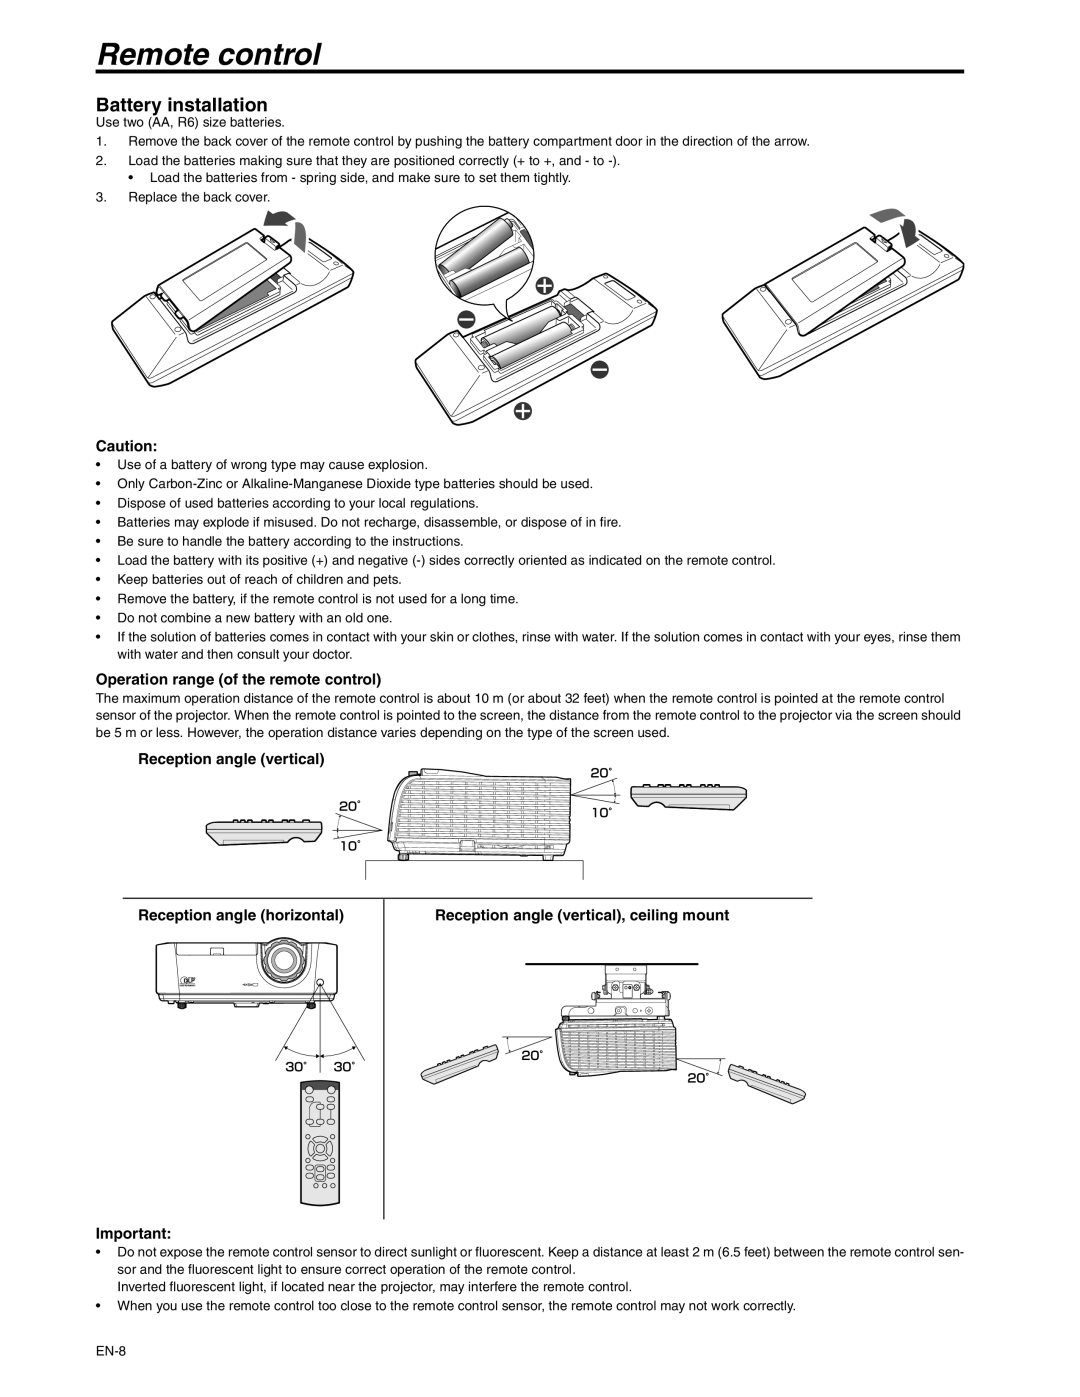 Mitsubishi Electronics XD250U-ST user manual Remote control, Battery installation, Operation range of the remote control 